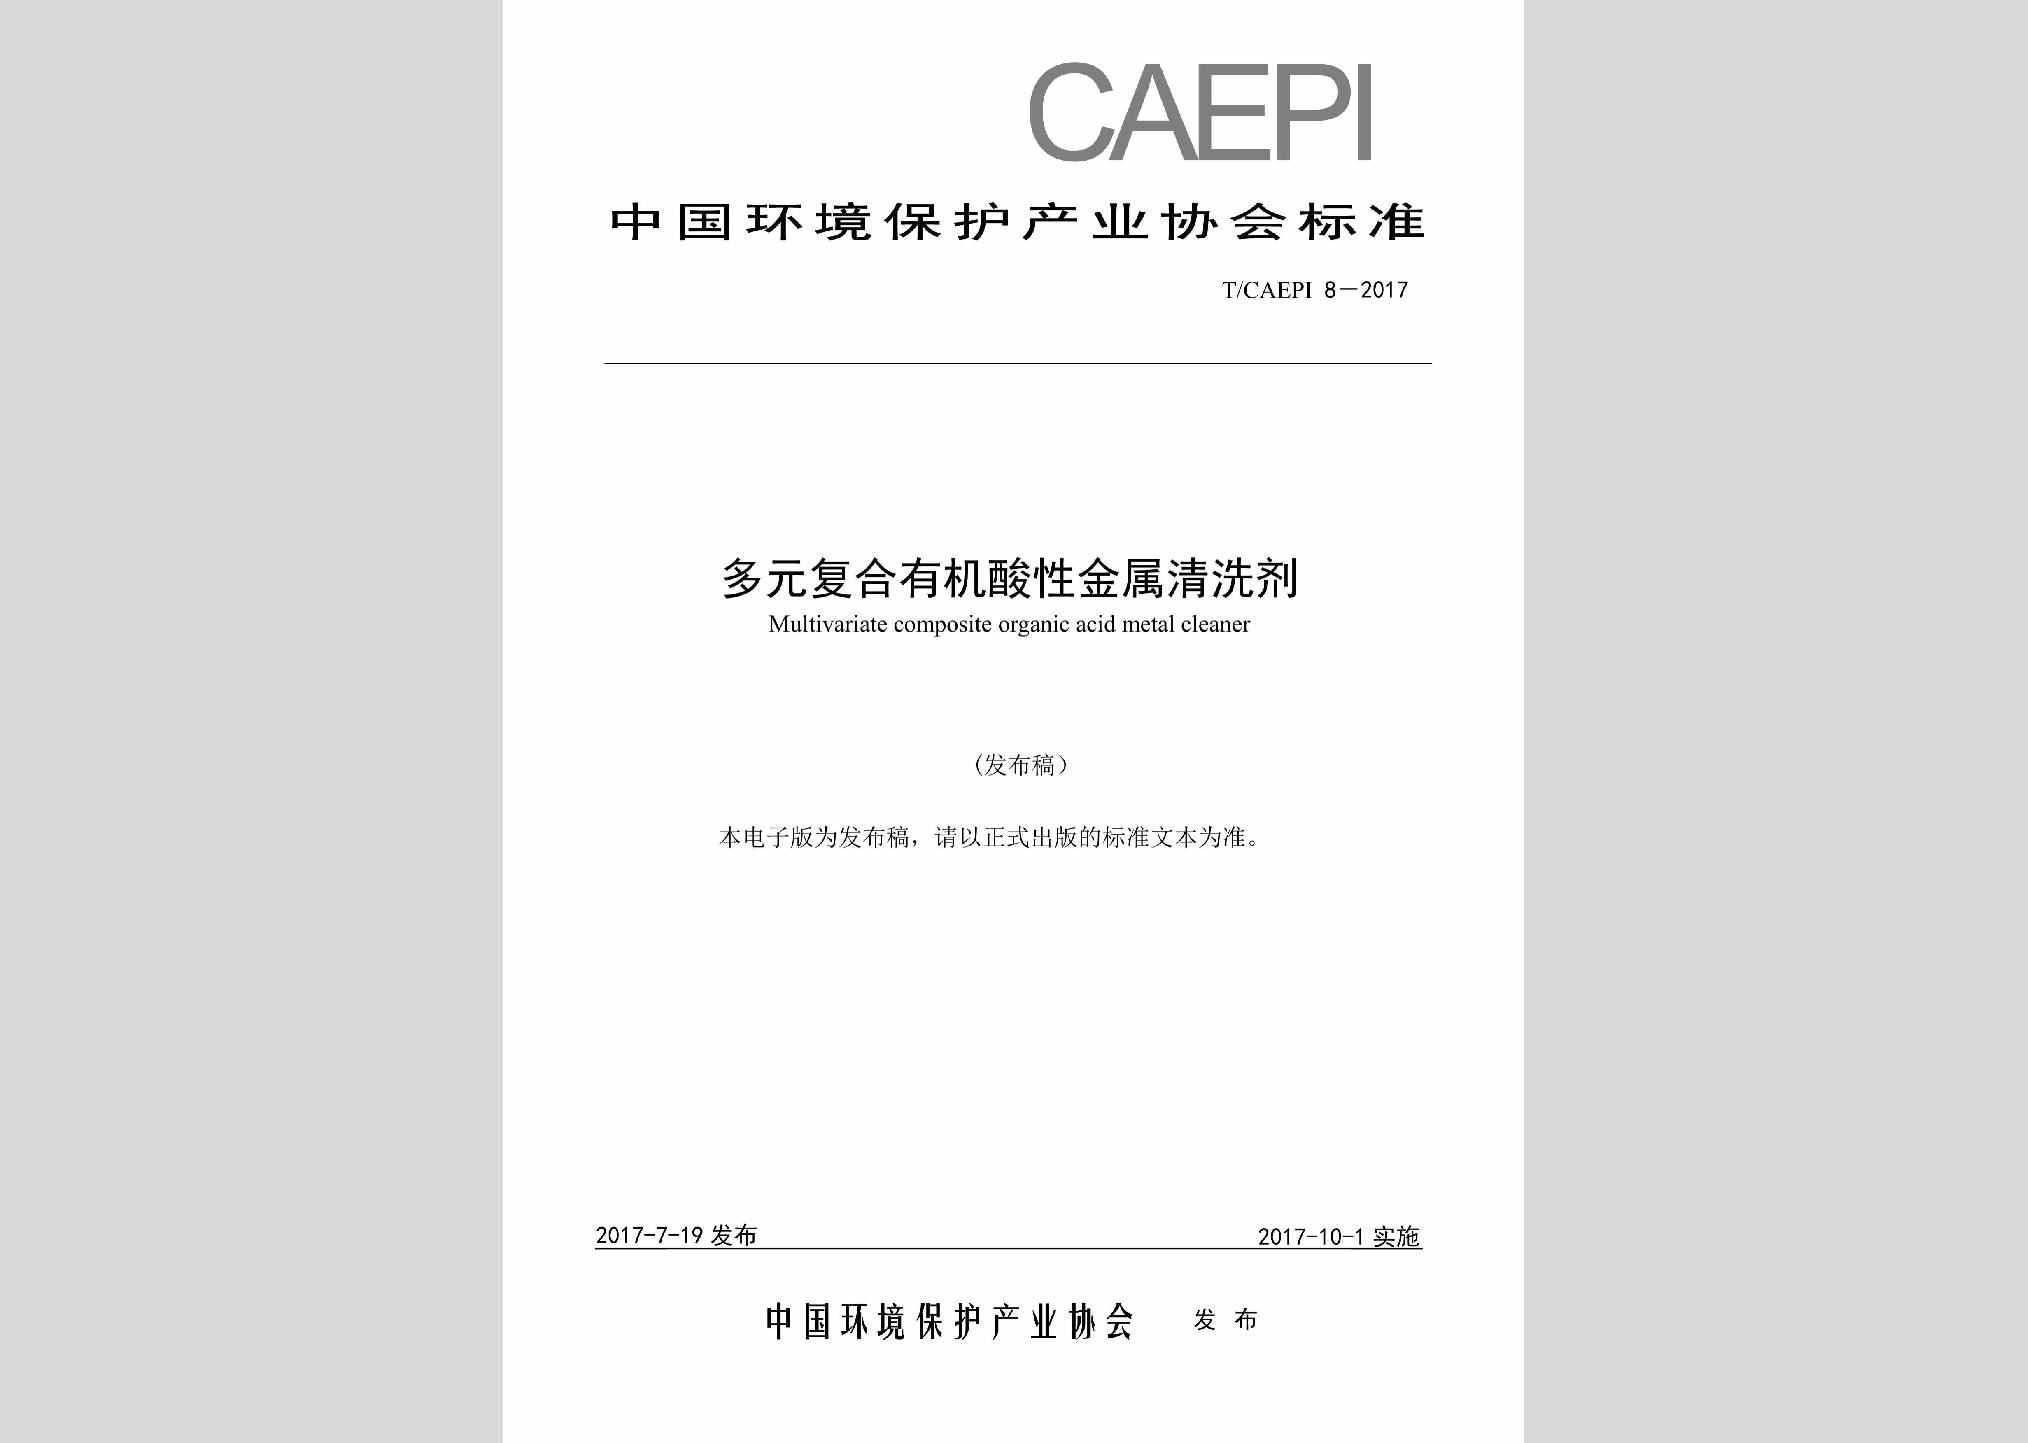 T/CAEPI8-2017：多元复合有机酸性金属清洗剂